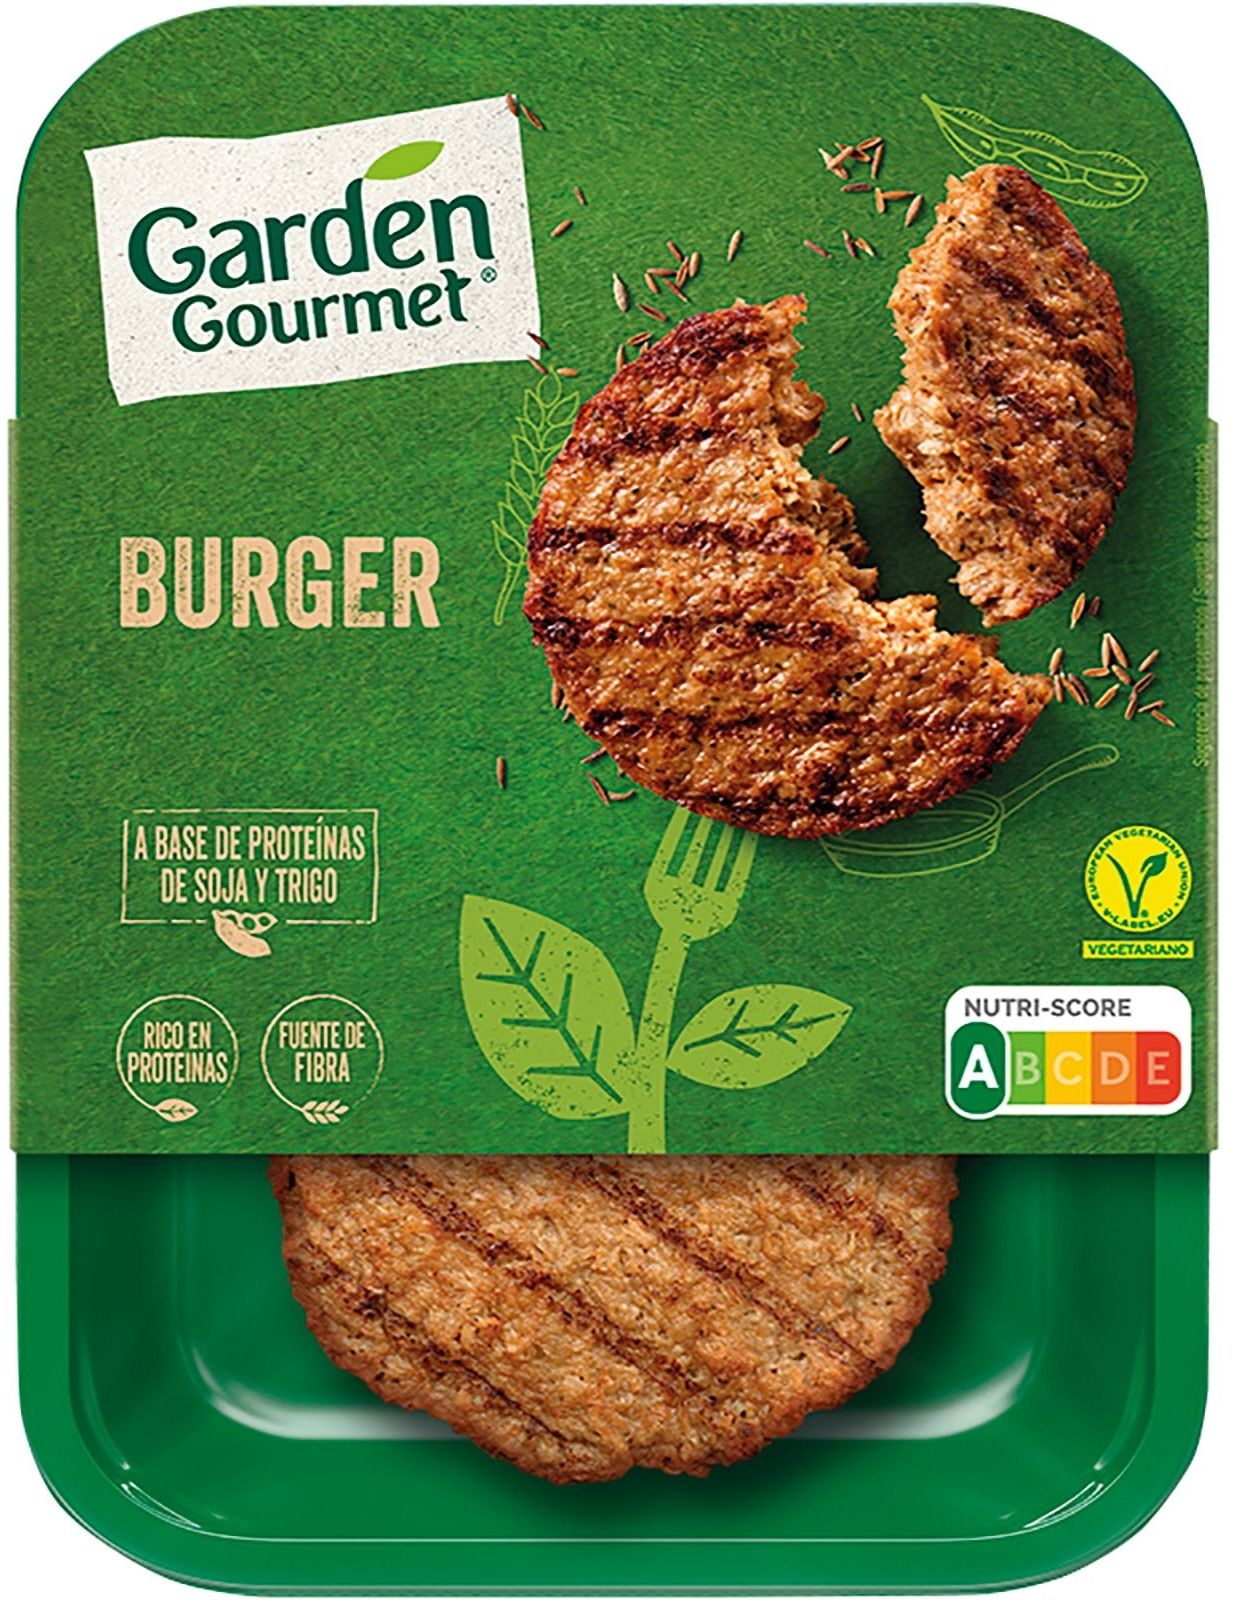 Oferta de Burger vegetarians Garden Gourmet 150g por 2,99€